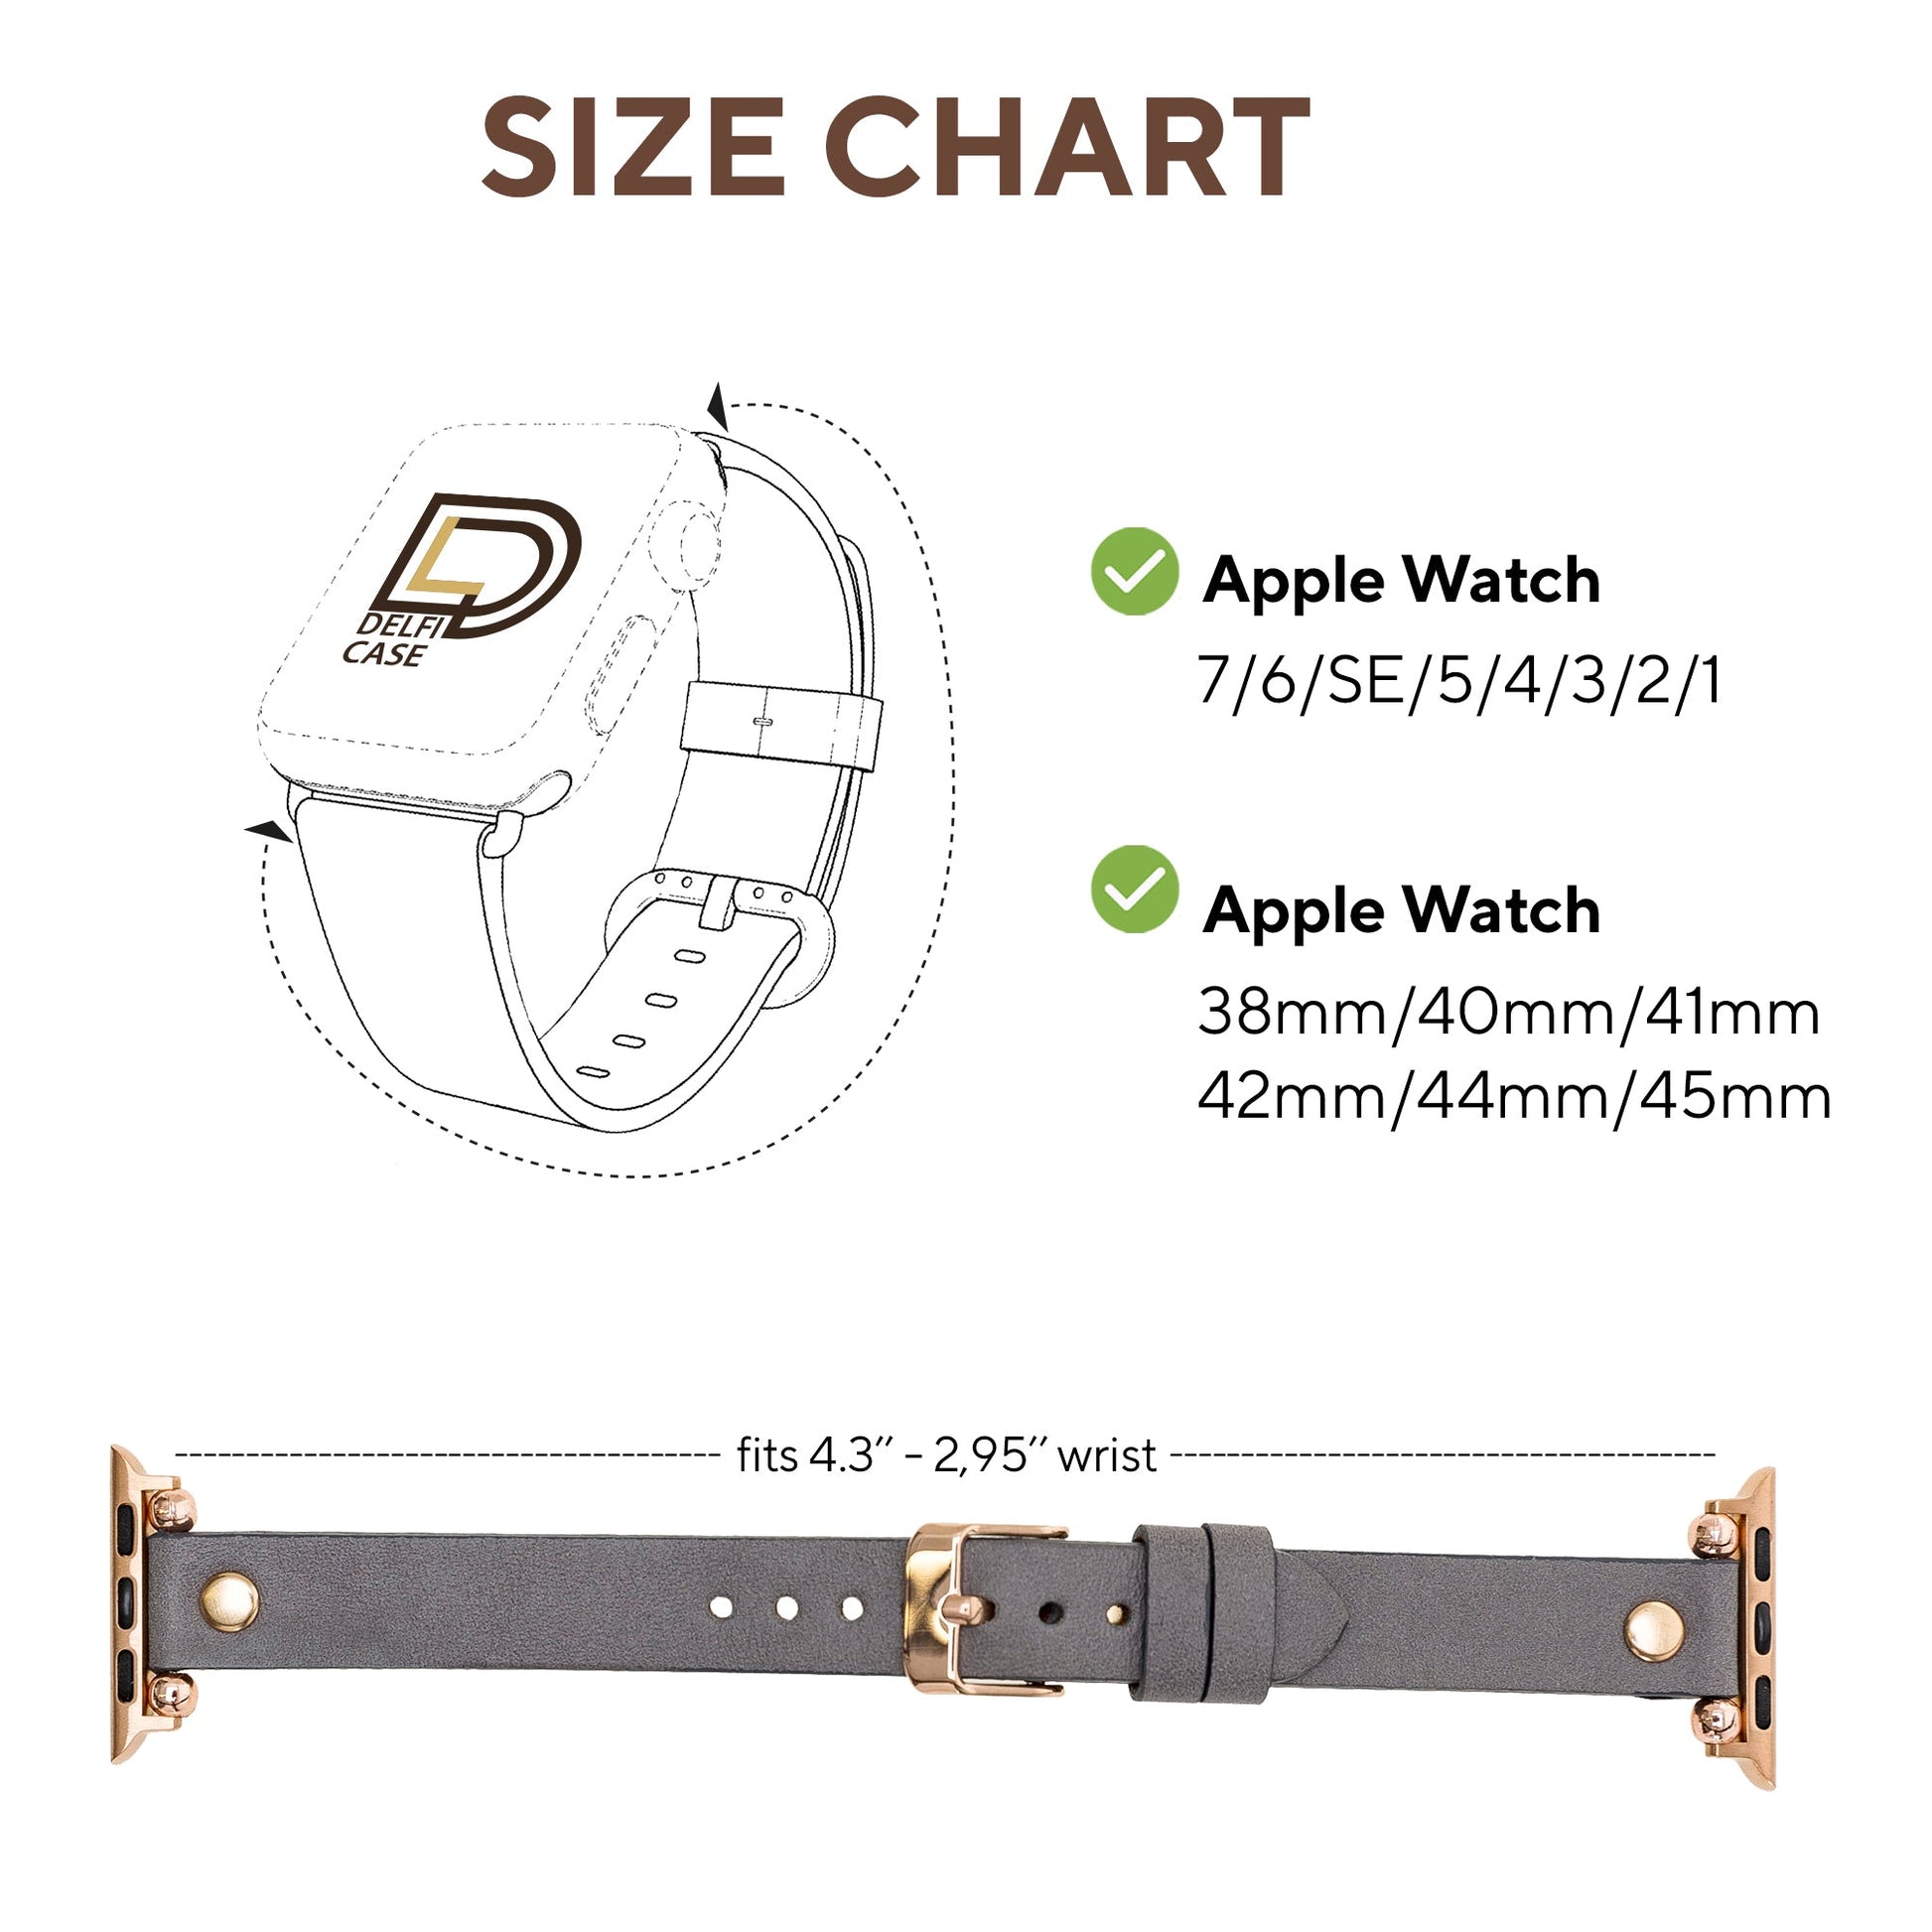  CASETiFY Apple Watch Bands (38mm/40mm/41mm) - CHEETAH